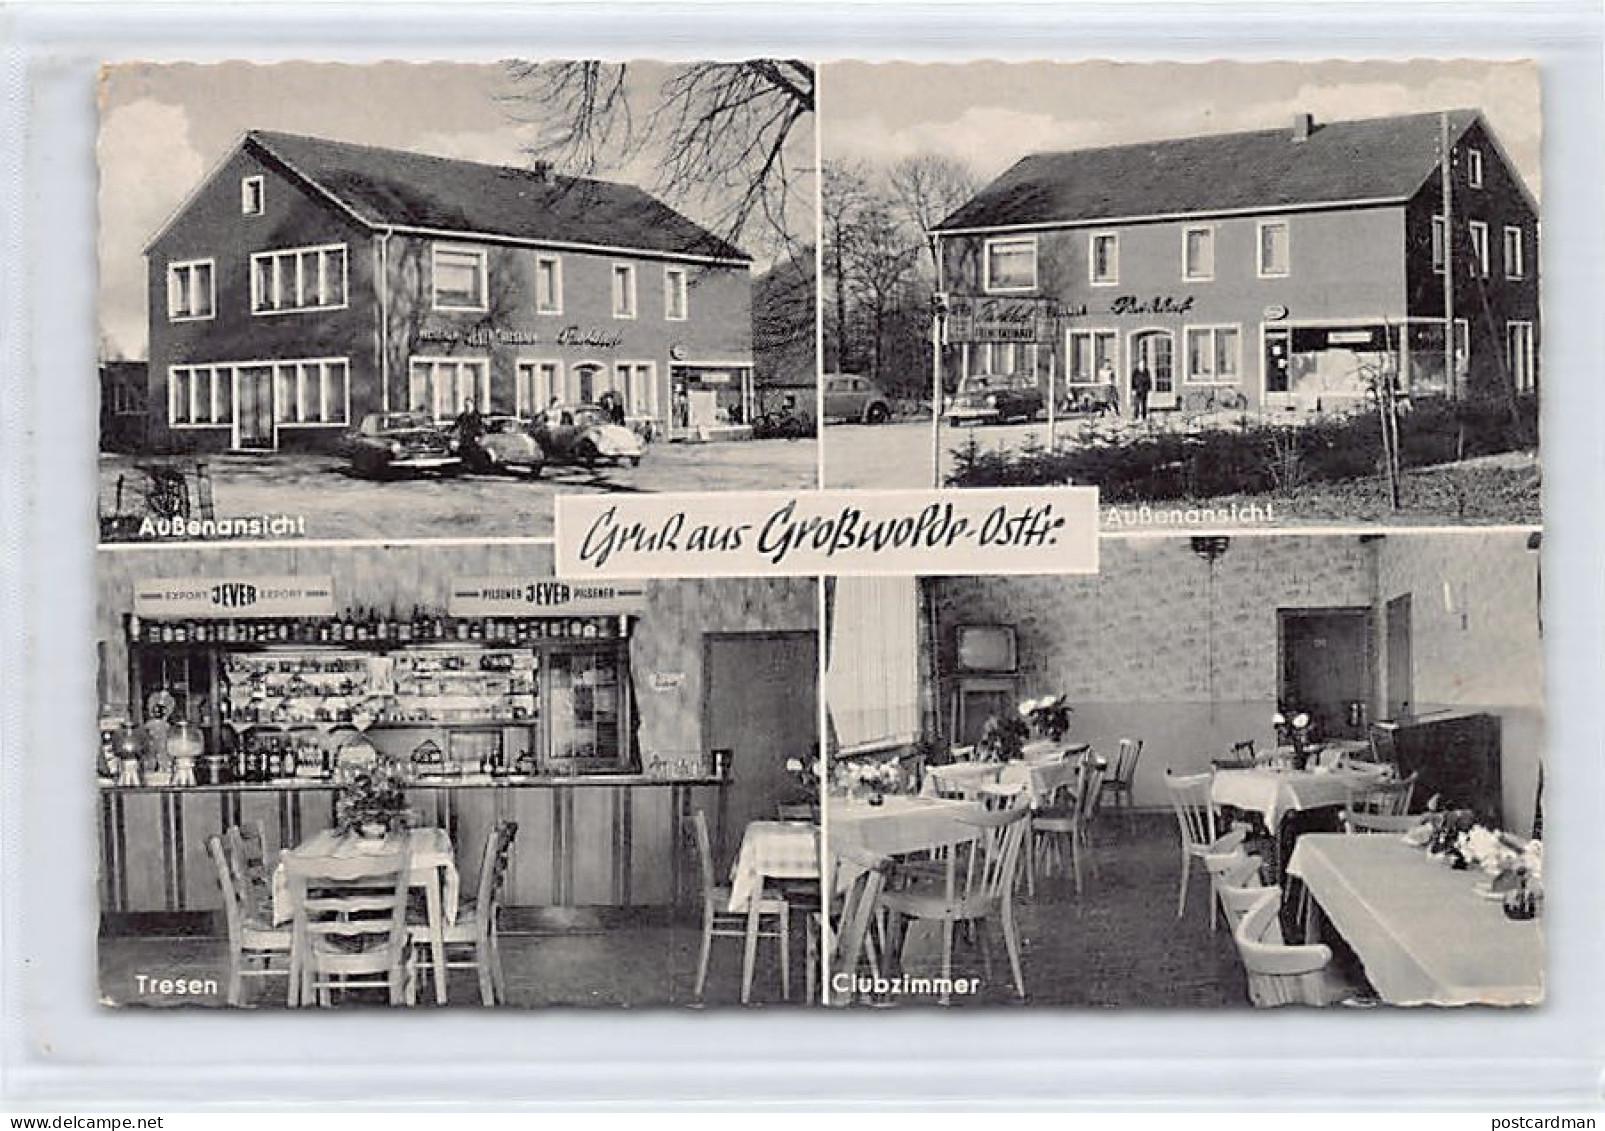 Großwolde (NI) Großwolde-Ostfriesland Mehrfachansicht Gaststätte PARKHOF Bes. A. Schaa Verlag W. Böhning,Fotograf, Leer - Leer